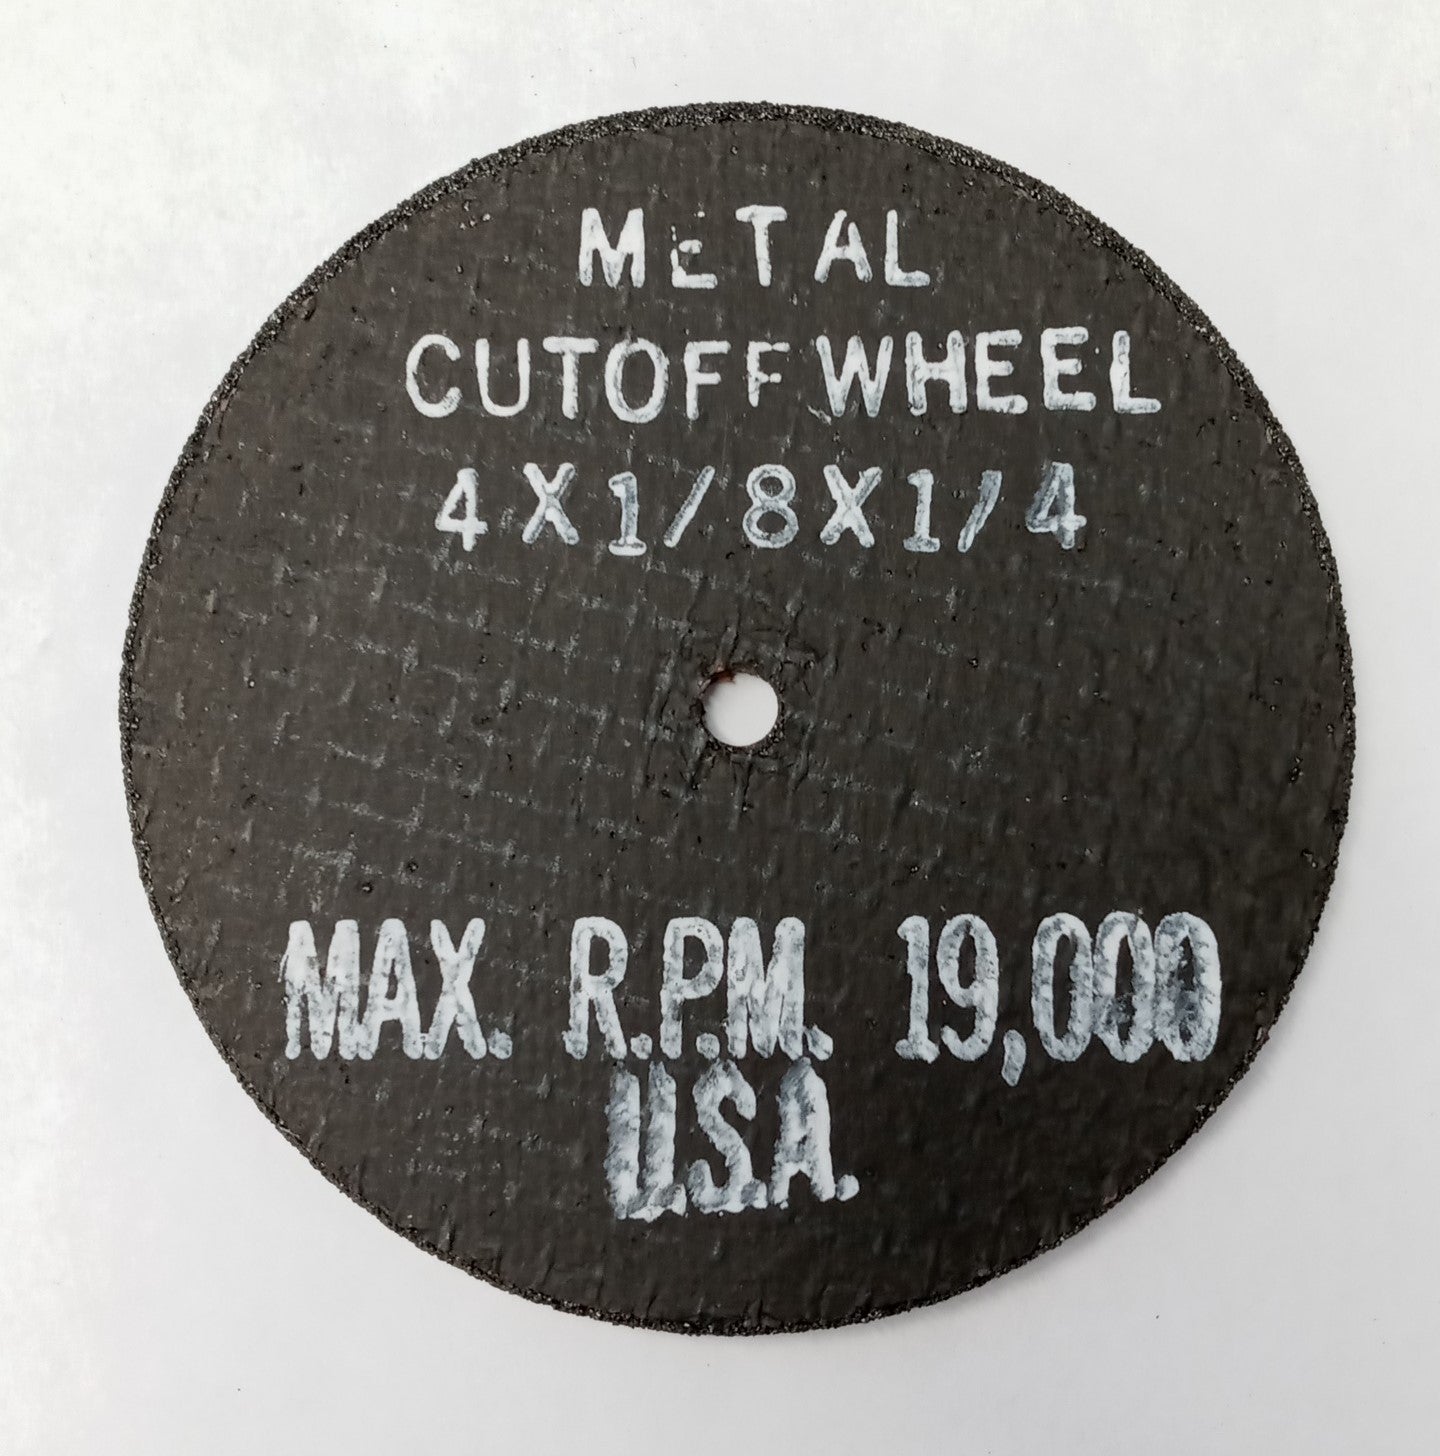 Farm & Fleet 185291 / 2051 Metal Cut Off Wheel  4 x 1/8  x 1/4 USA